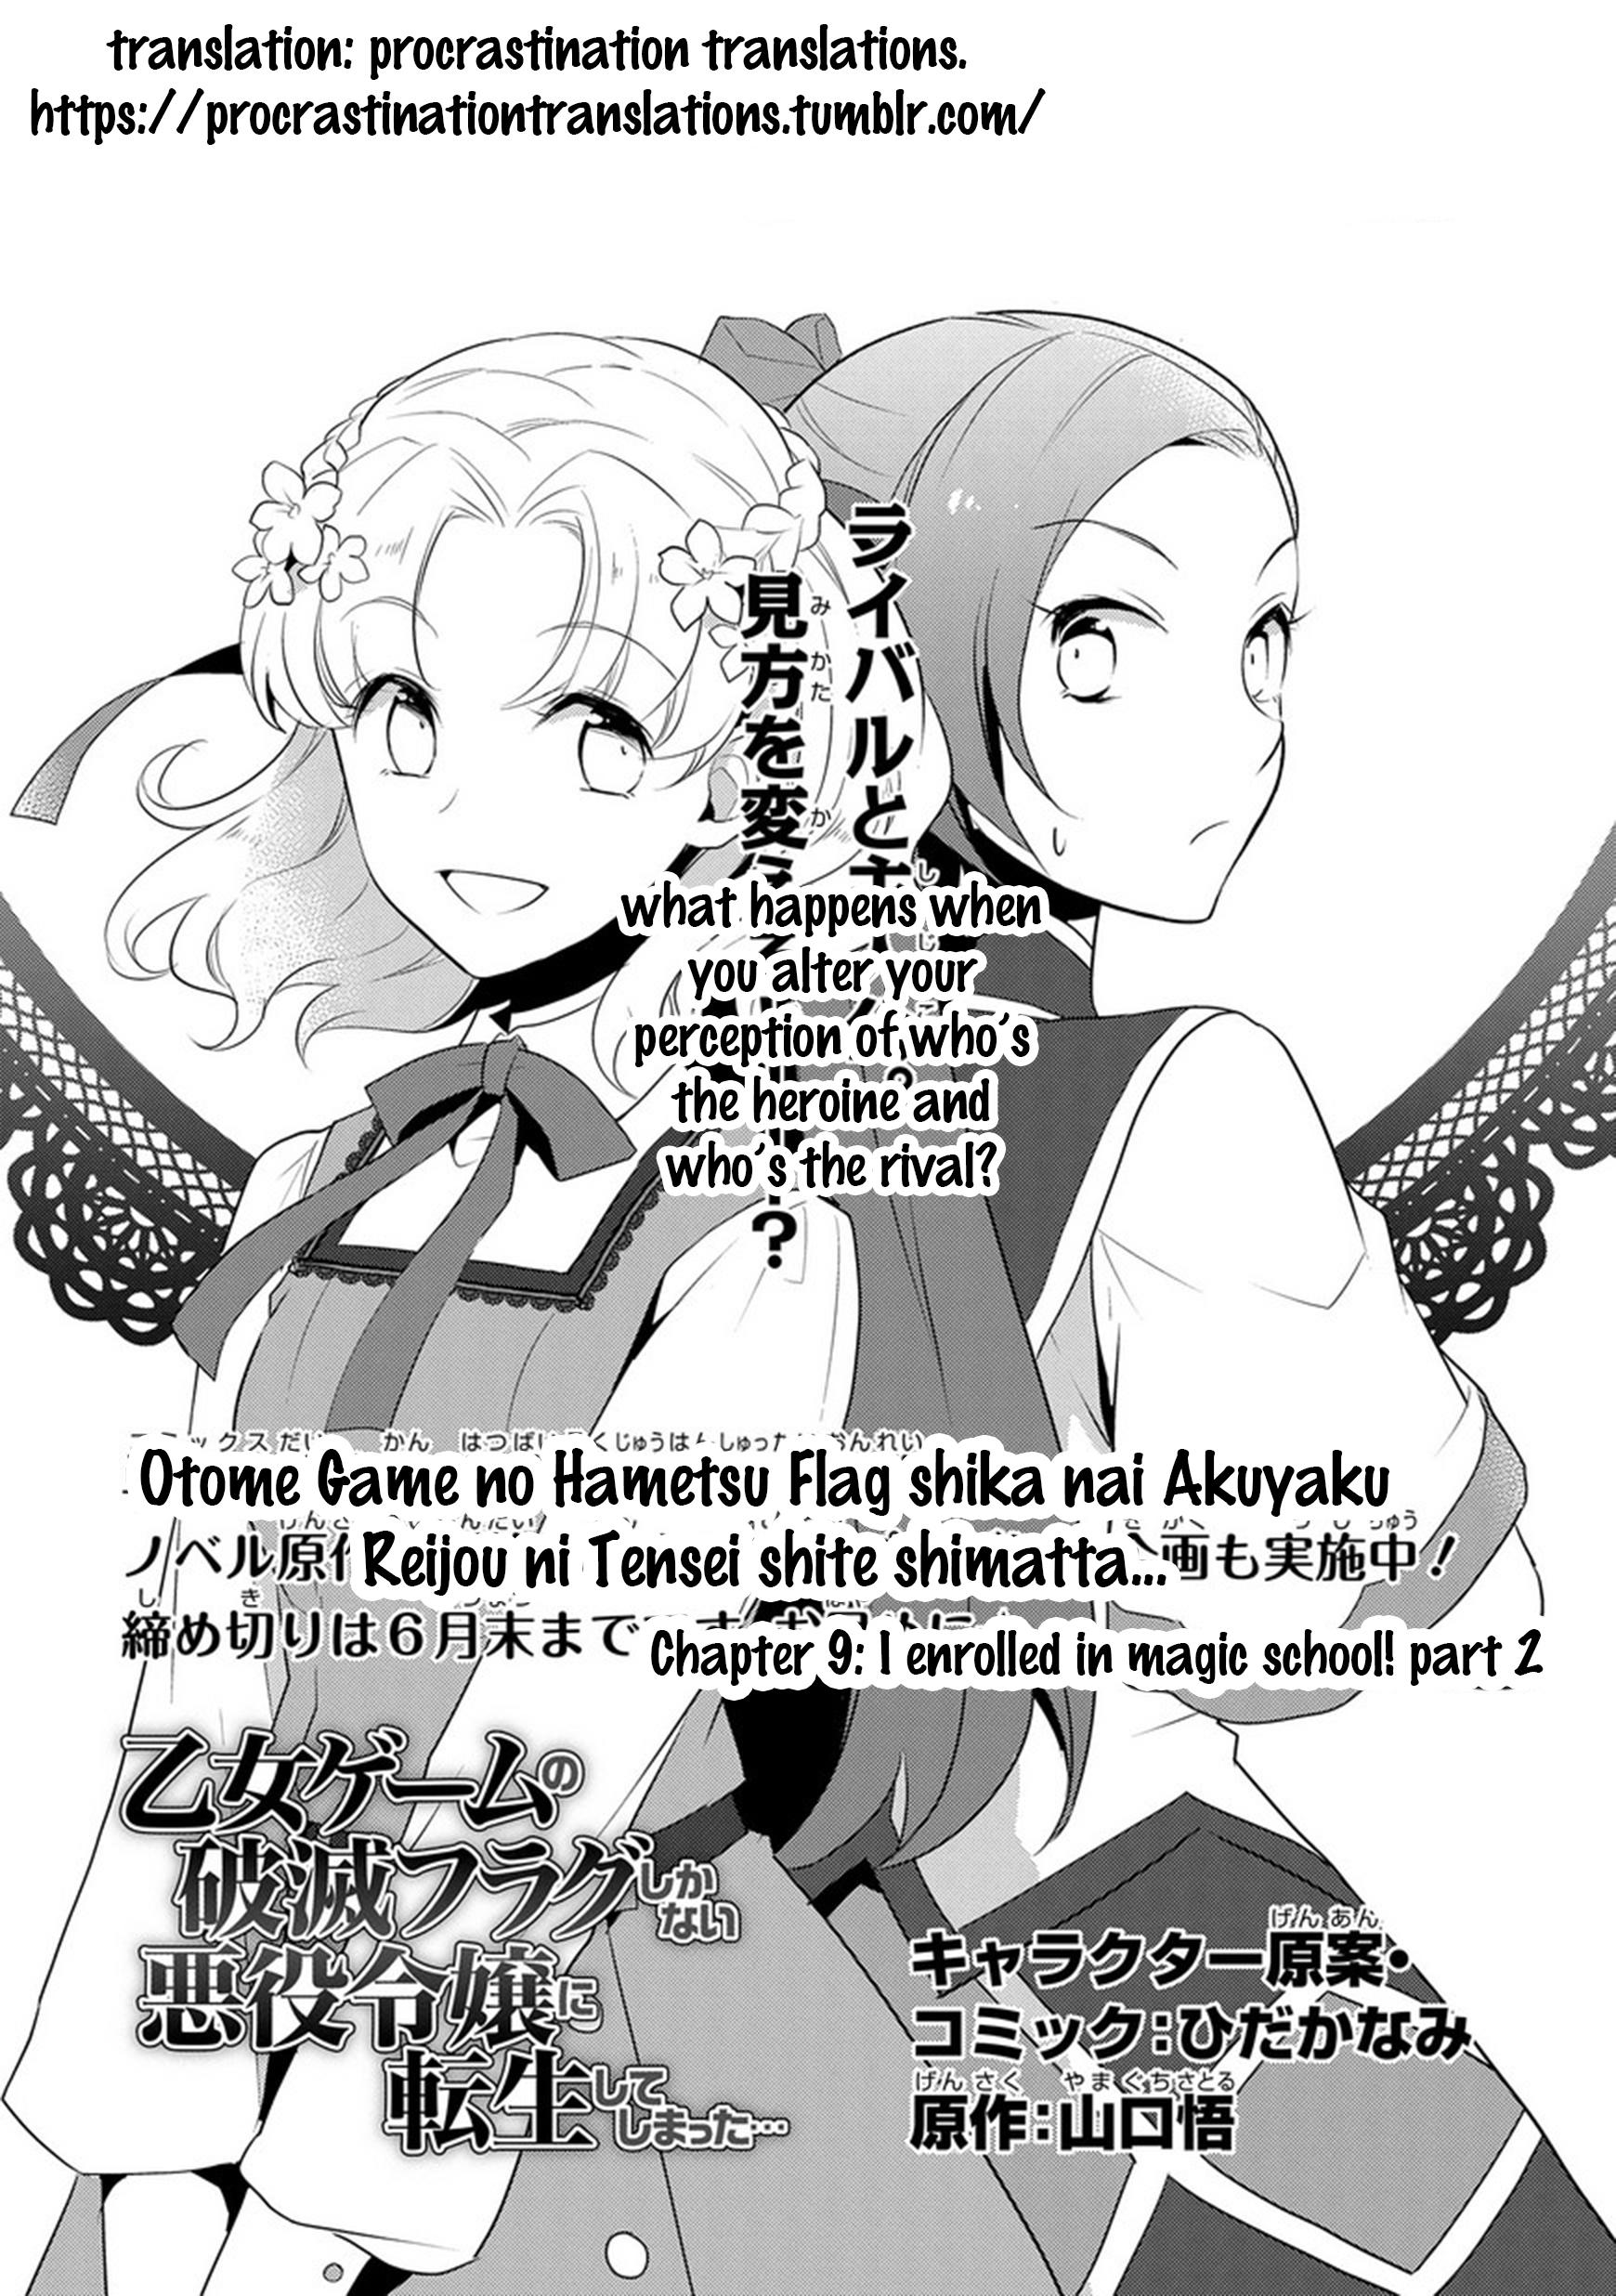 PROCRASTINATION TRANSLATIONS — Bakarina/ Otome Game no Hametsu